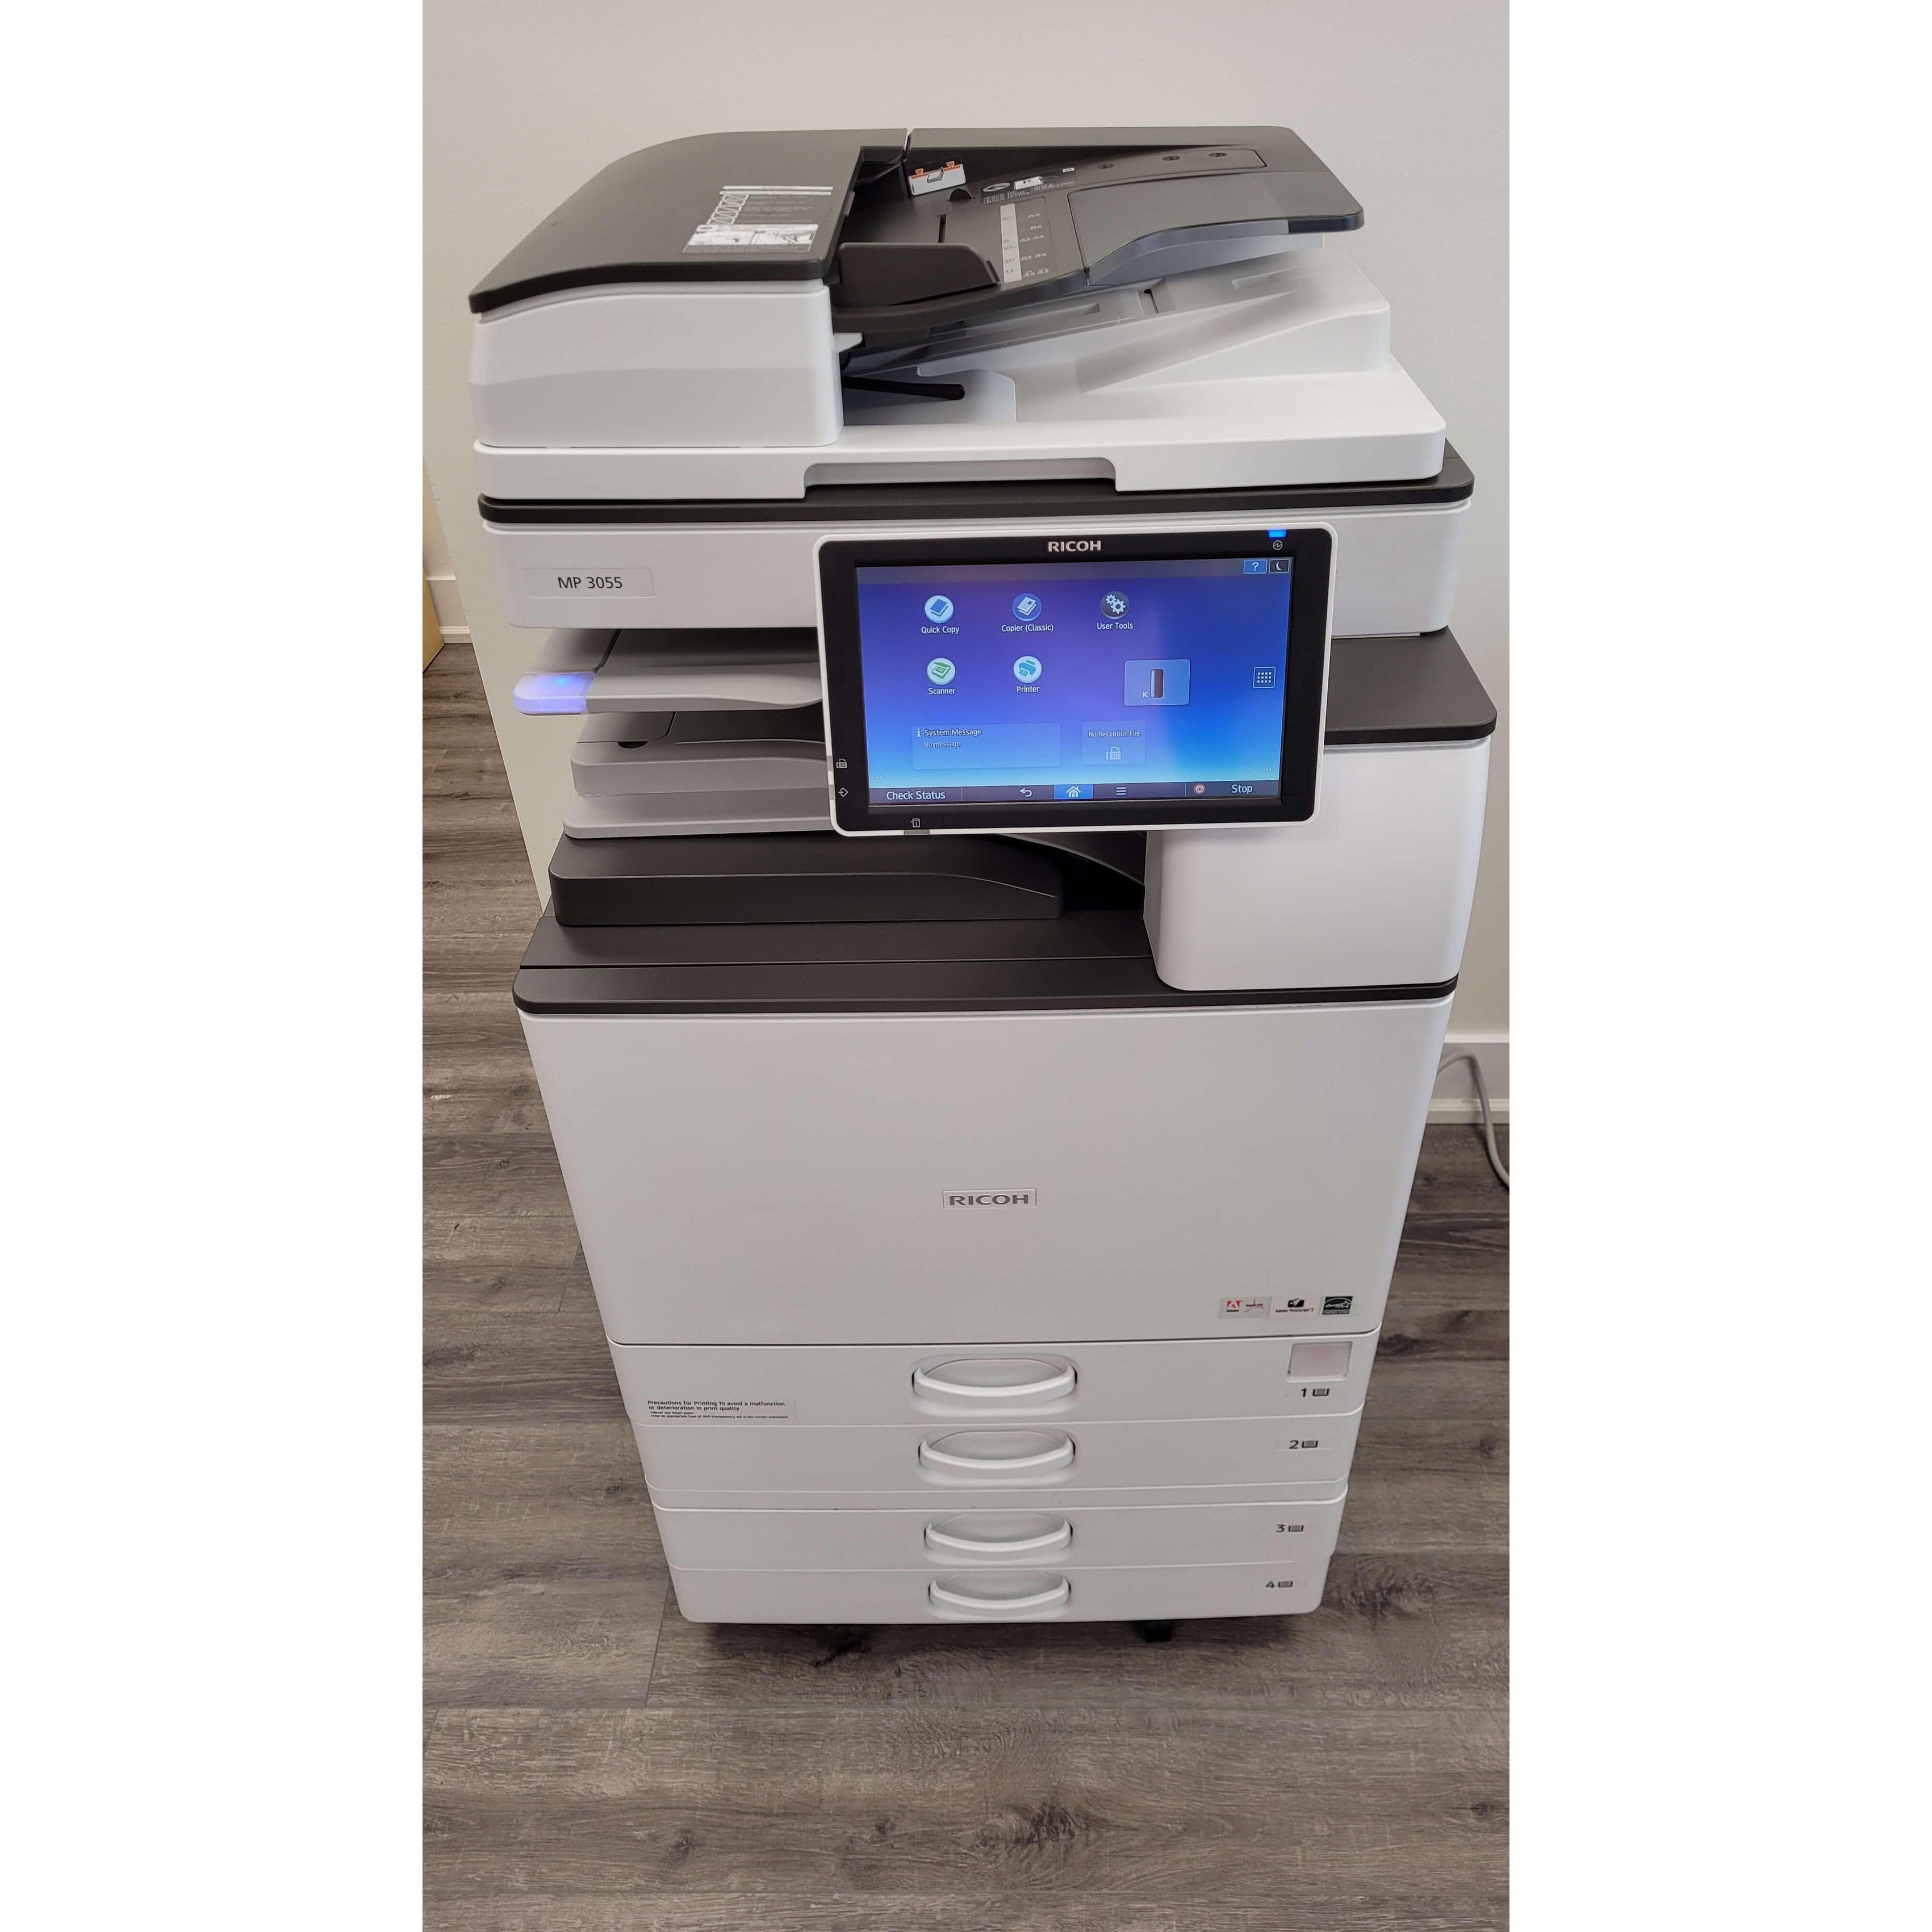 Ricoh MP 2555 Multifunction Printer Copier